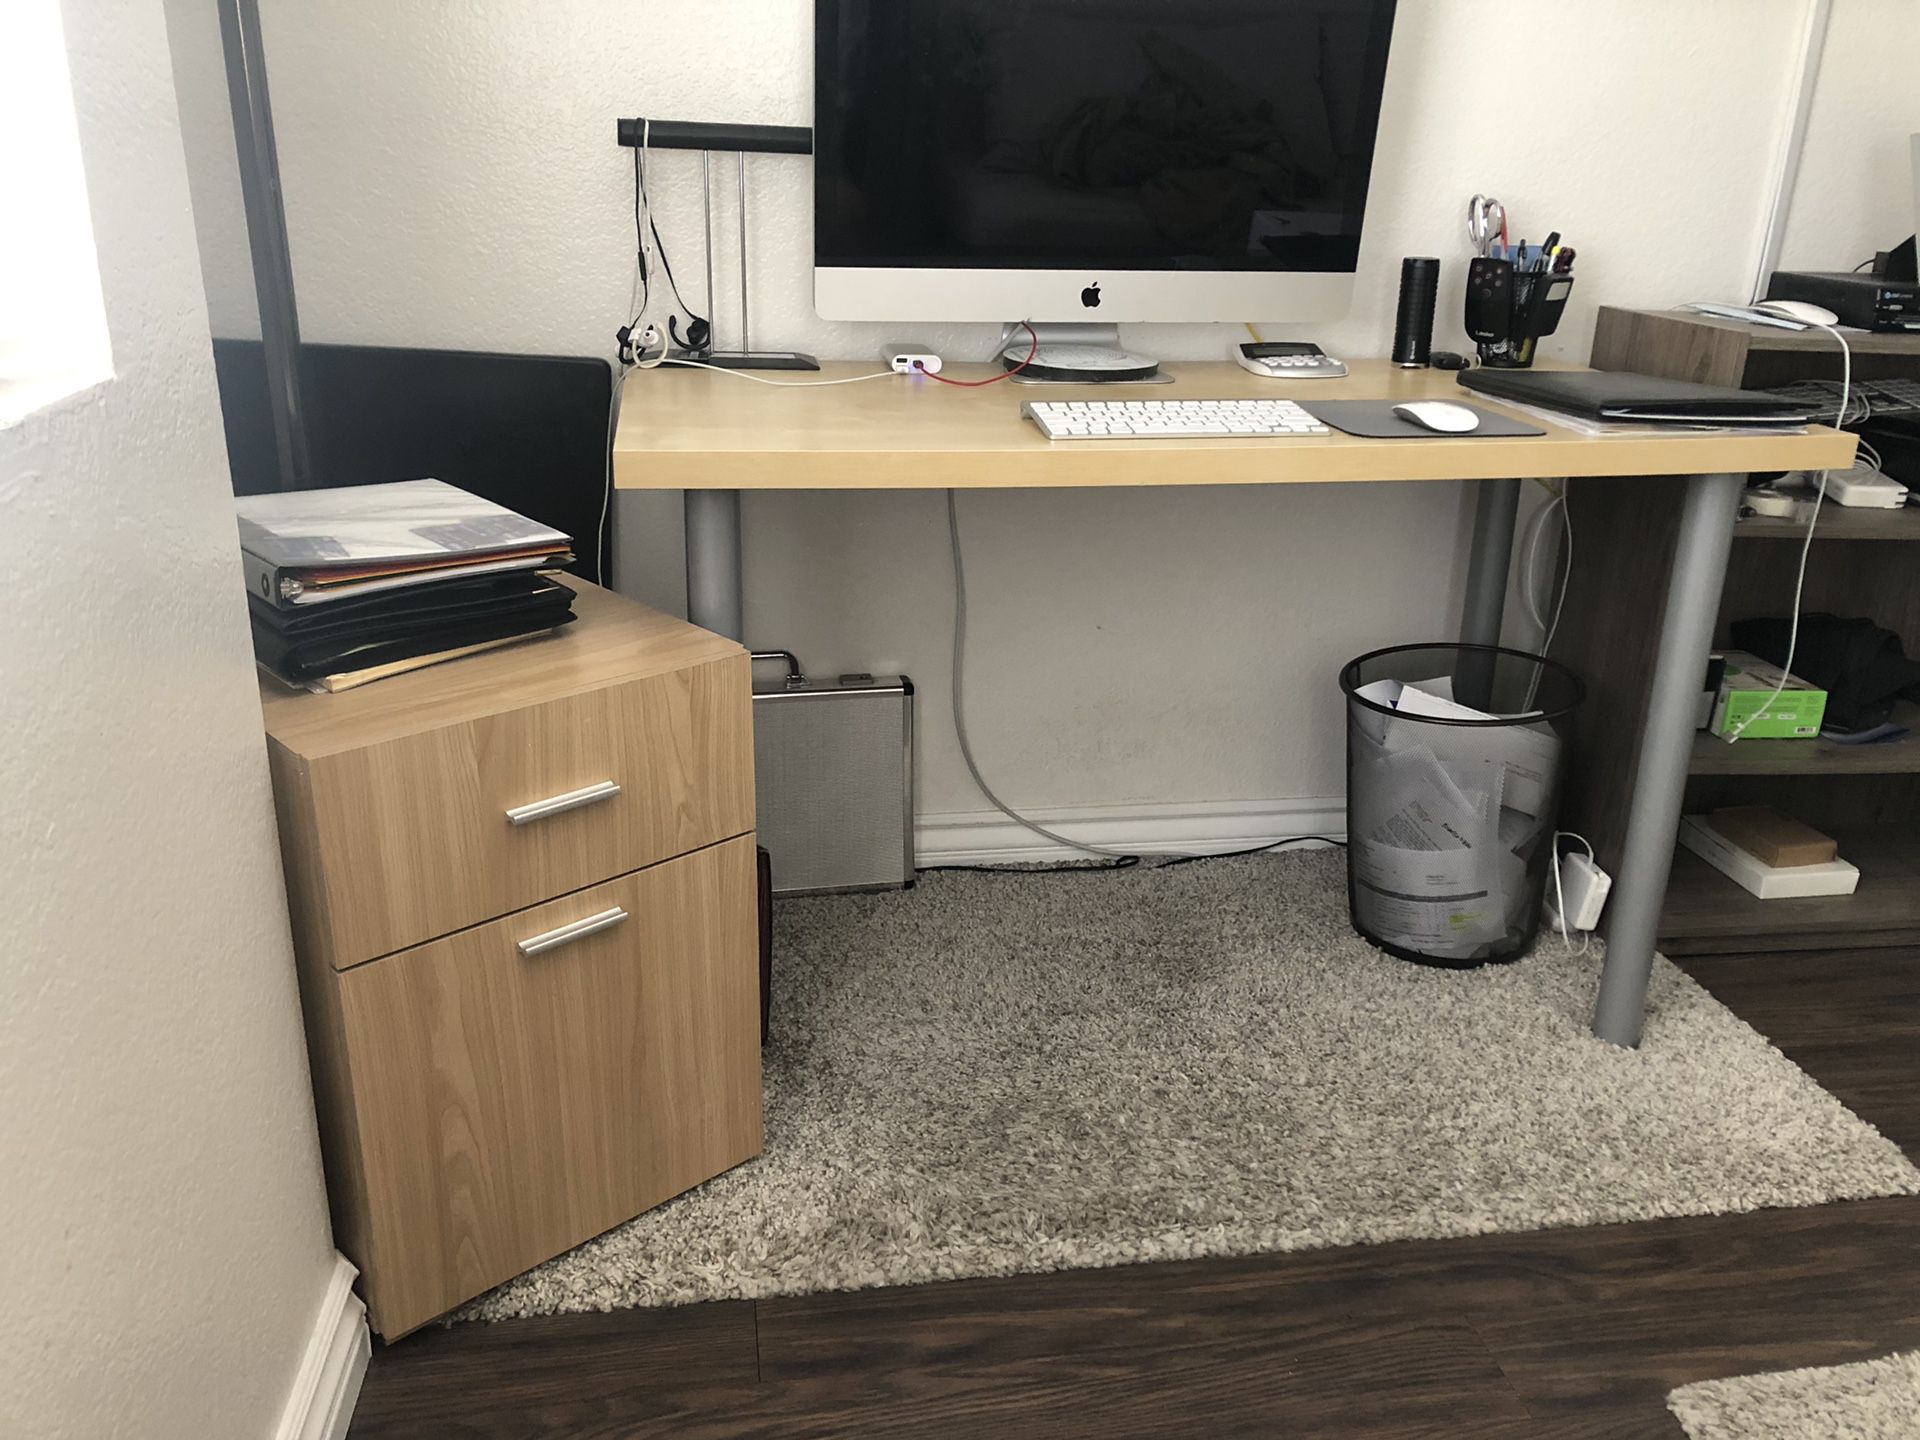 Matching desk, filing cabinet, shelf